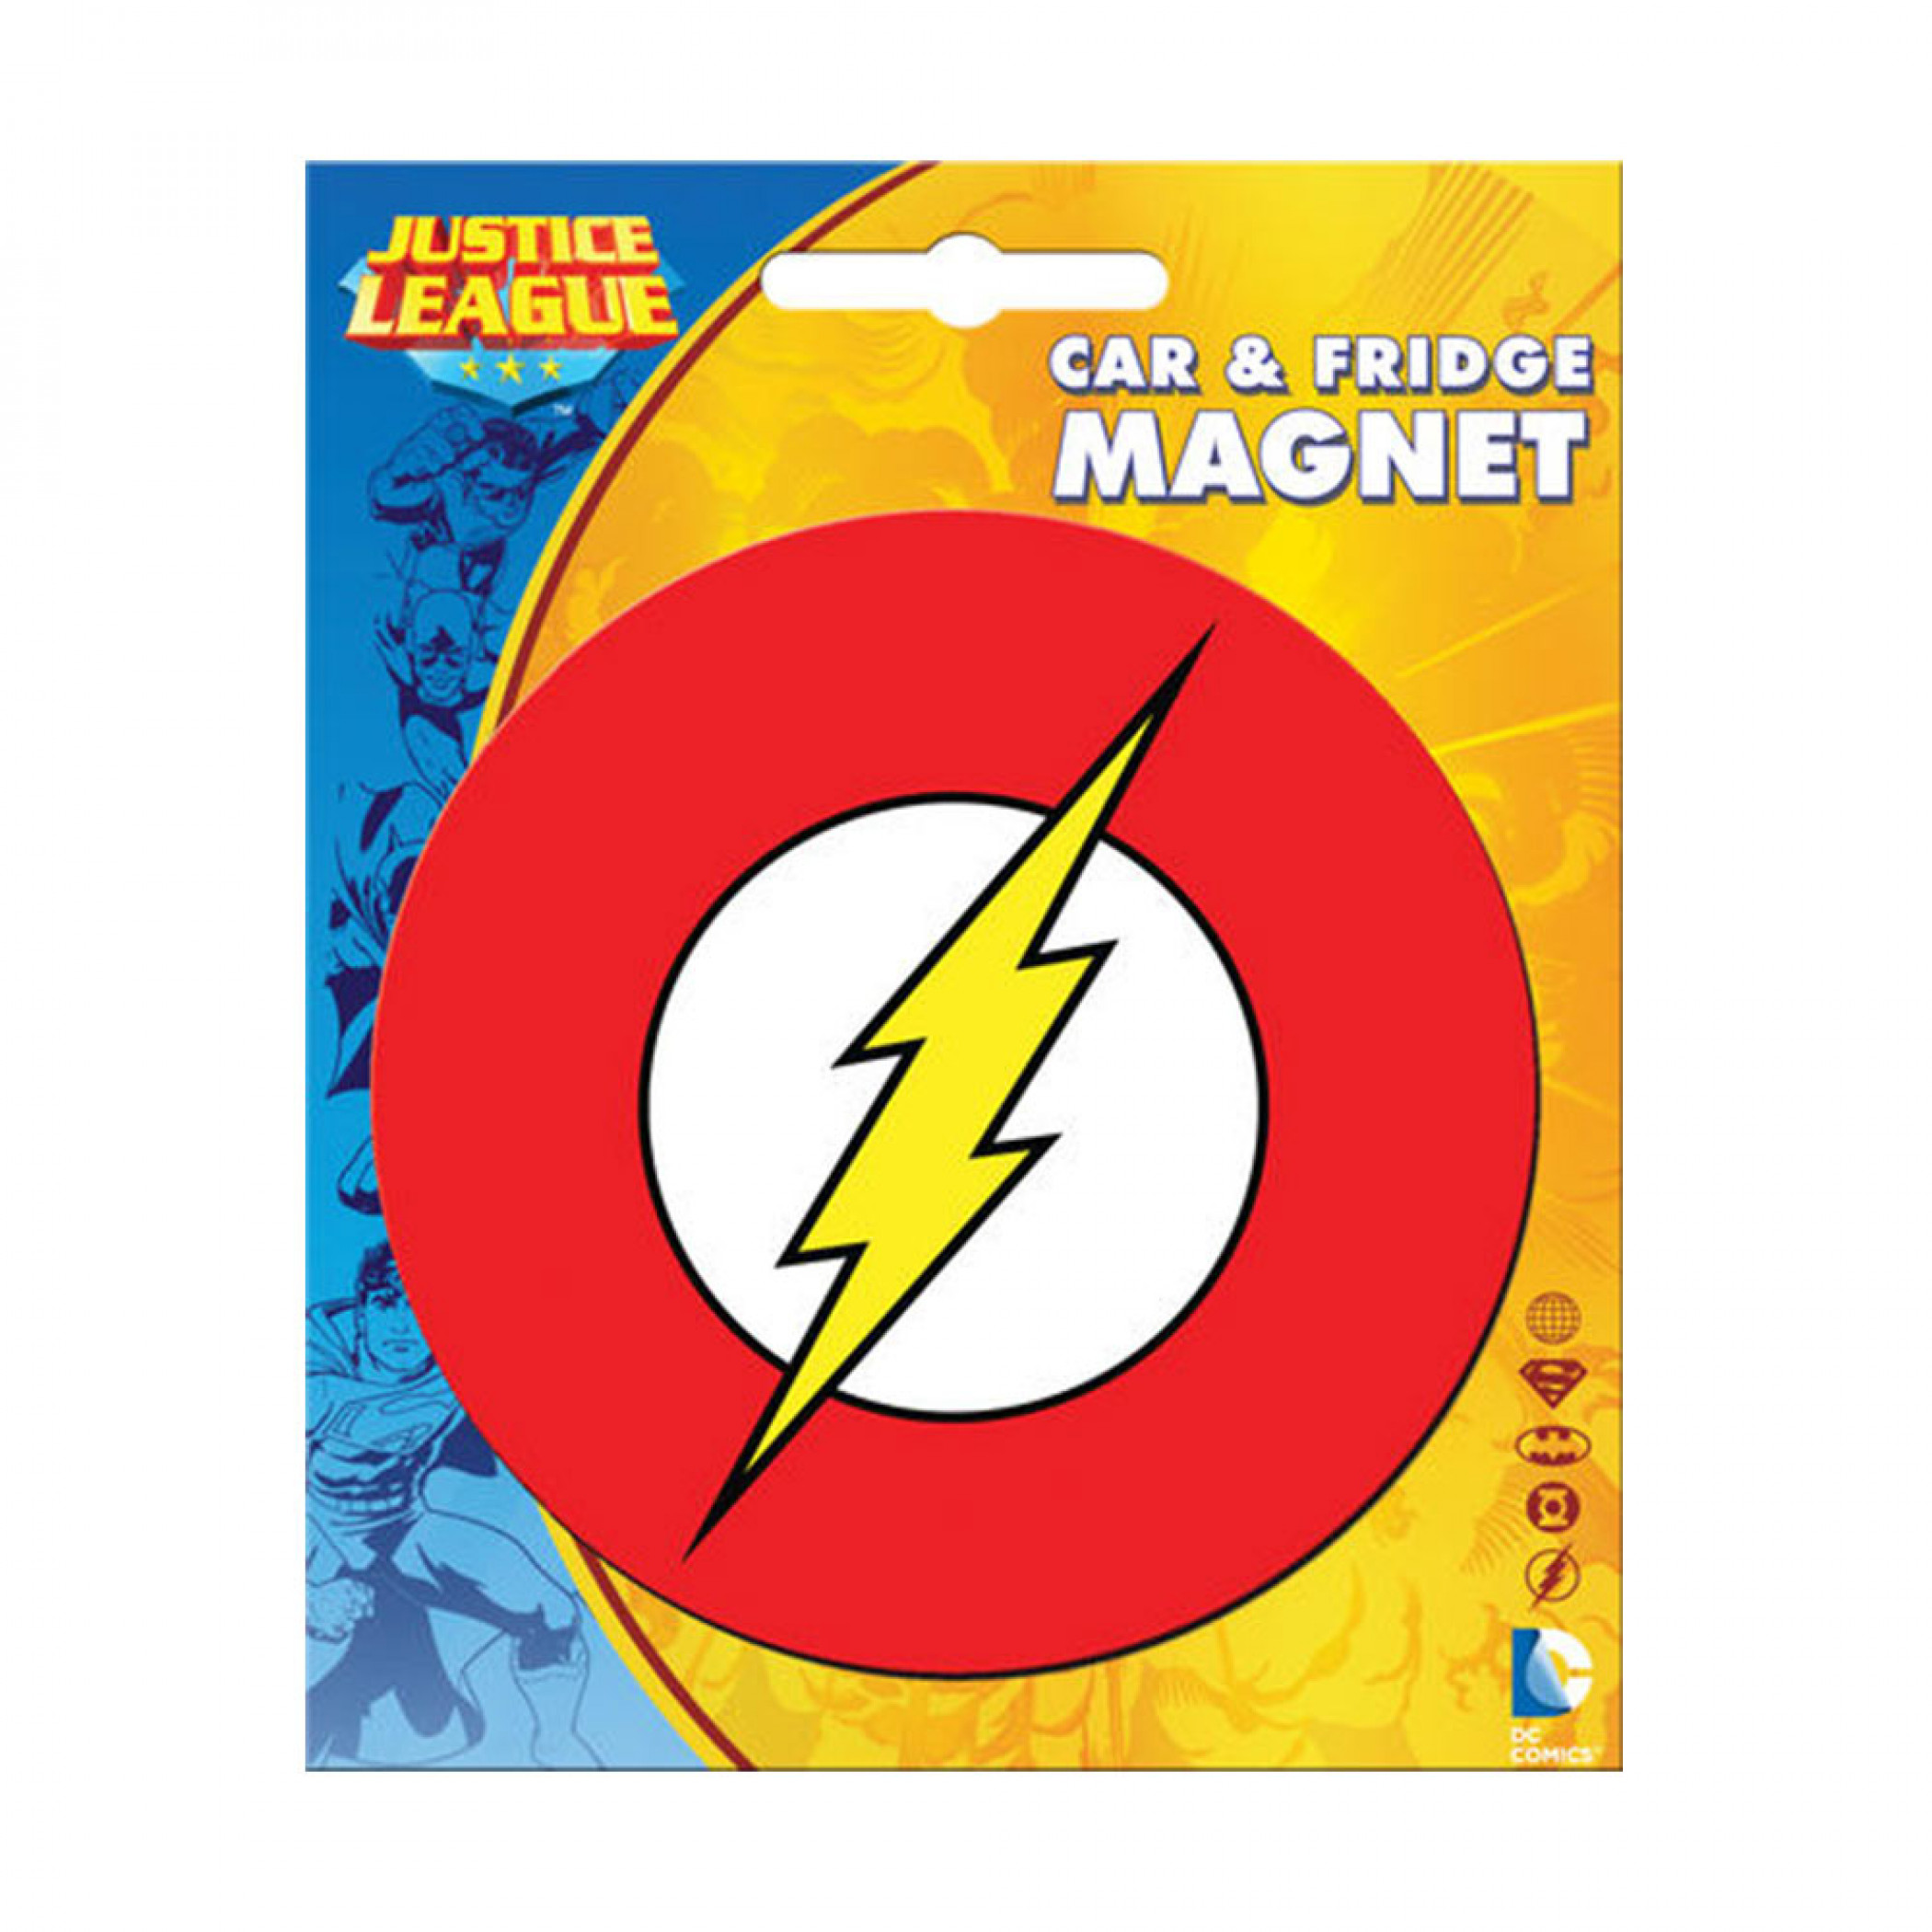 The Flash Car and Fridge Magnet